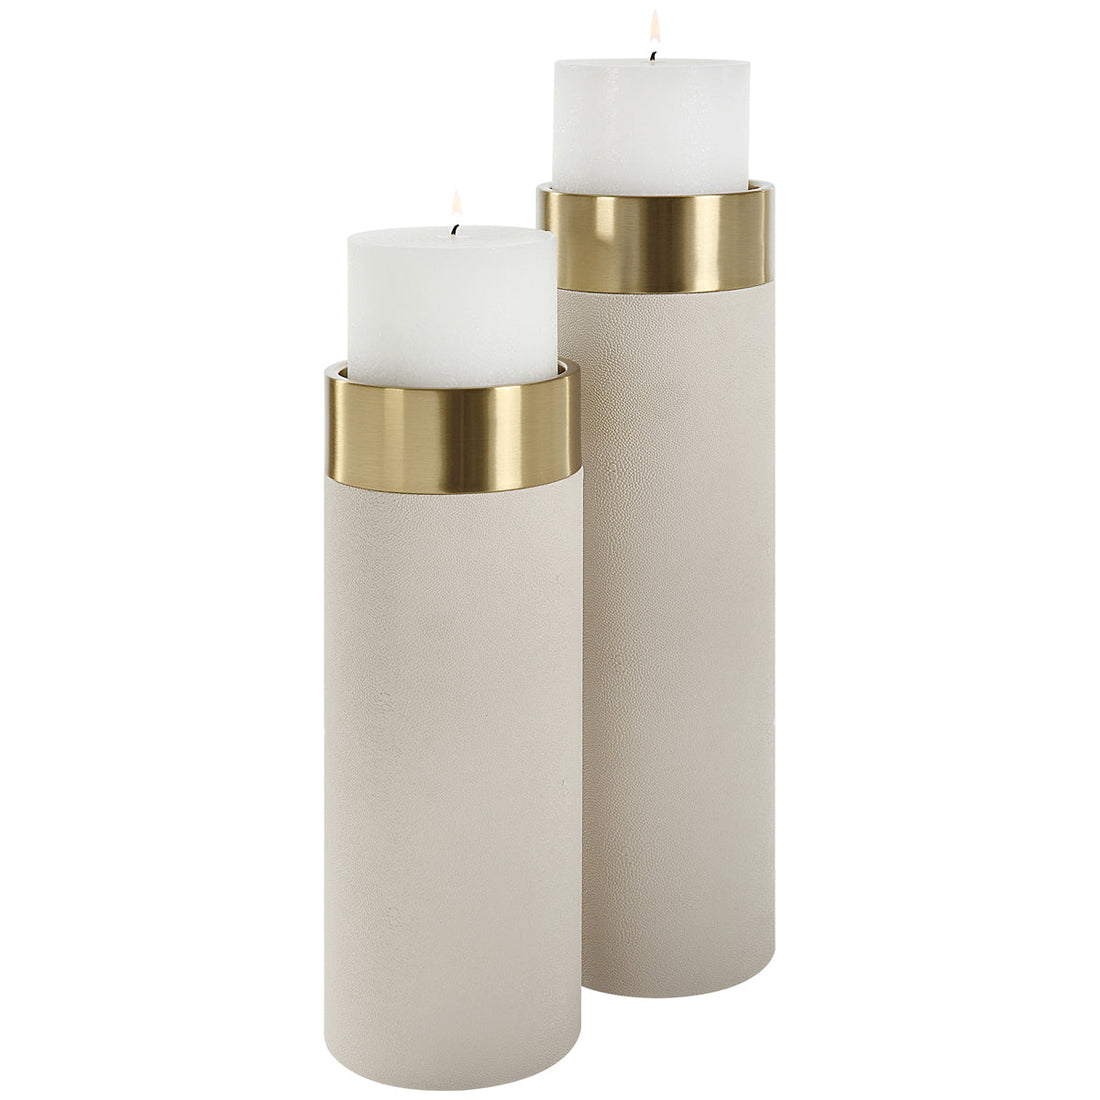 Uttermost Wessex White Pillar Candleholders, 2-Piece Set